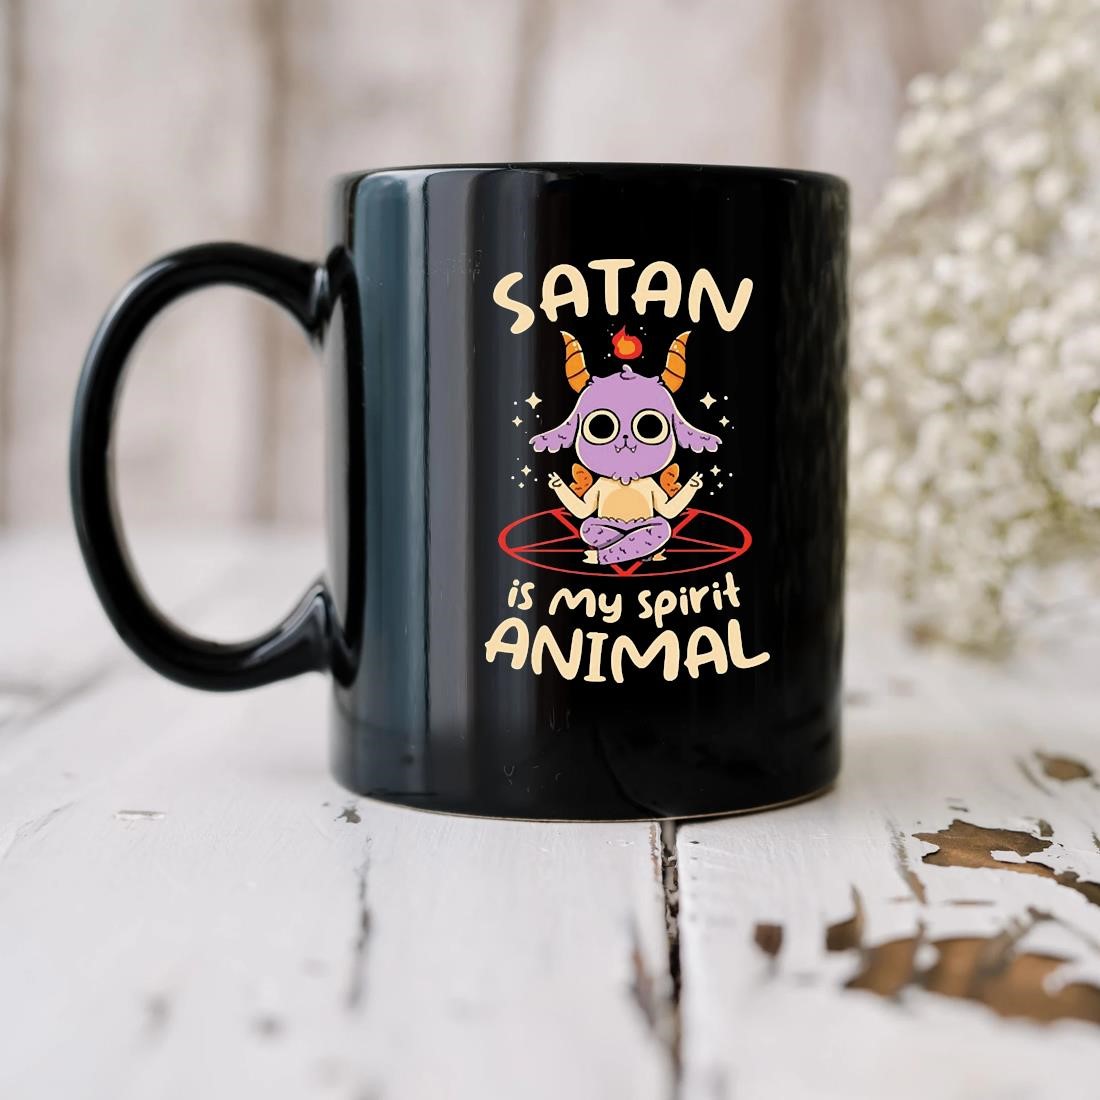 Satan Is My Spirit Animal Of Mug biu.jpg